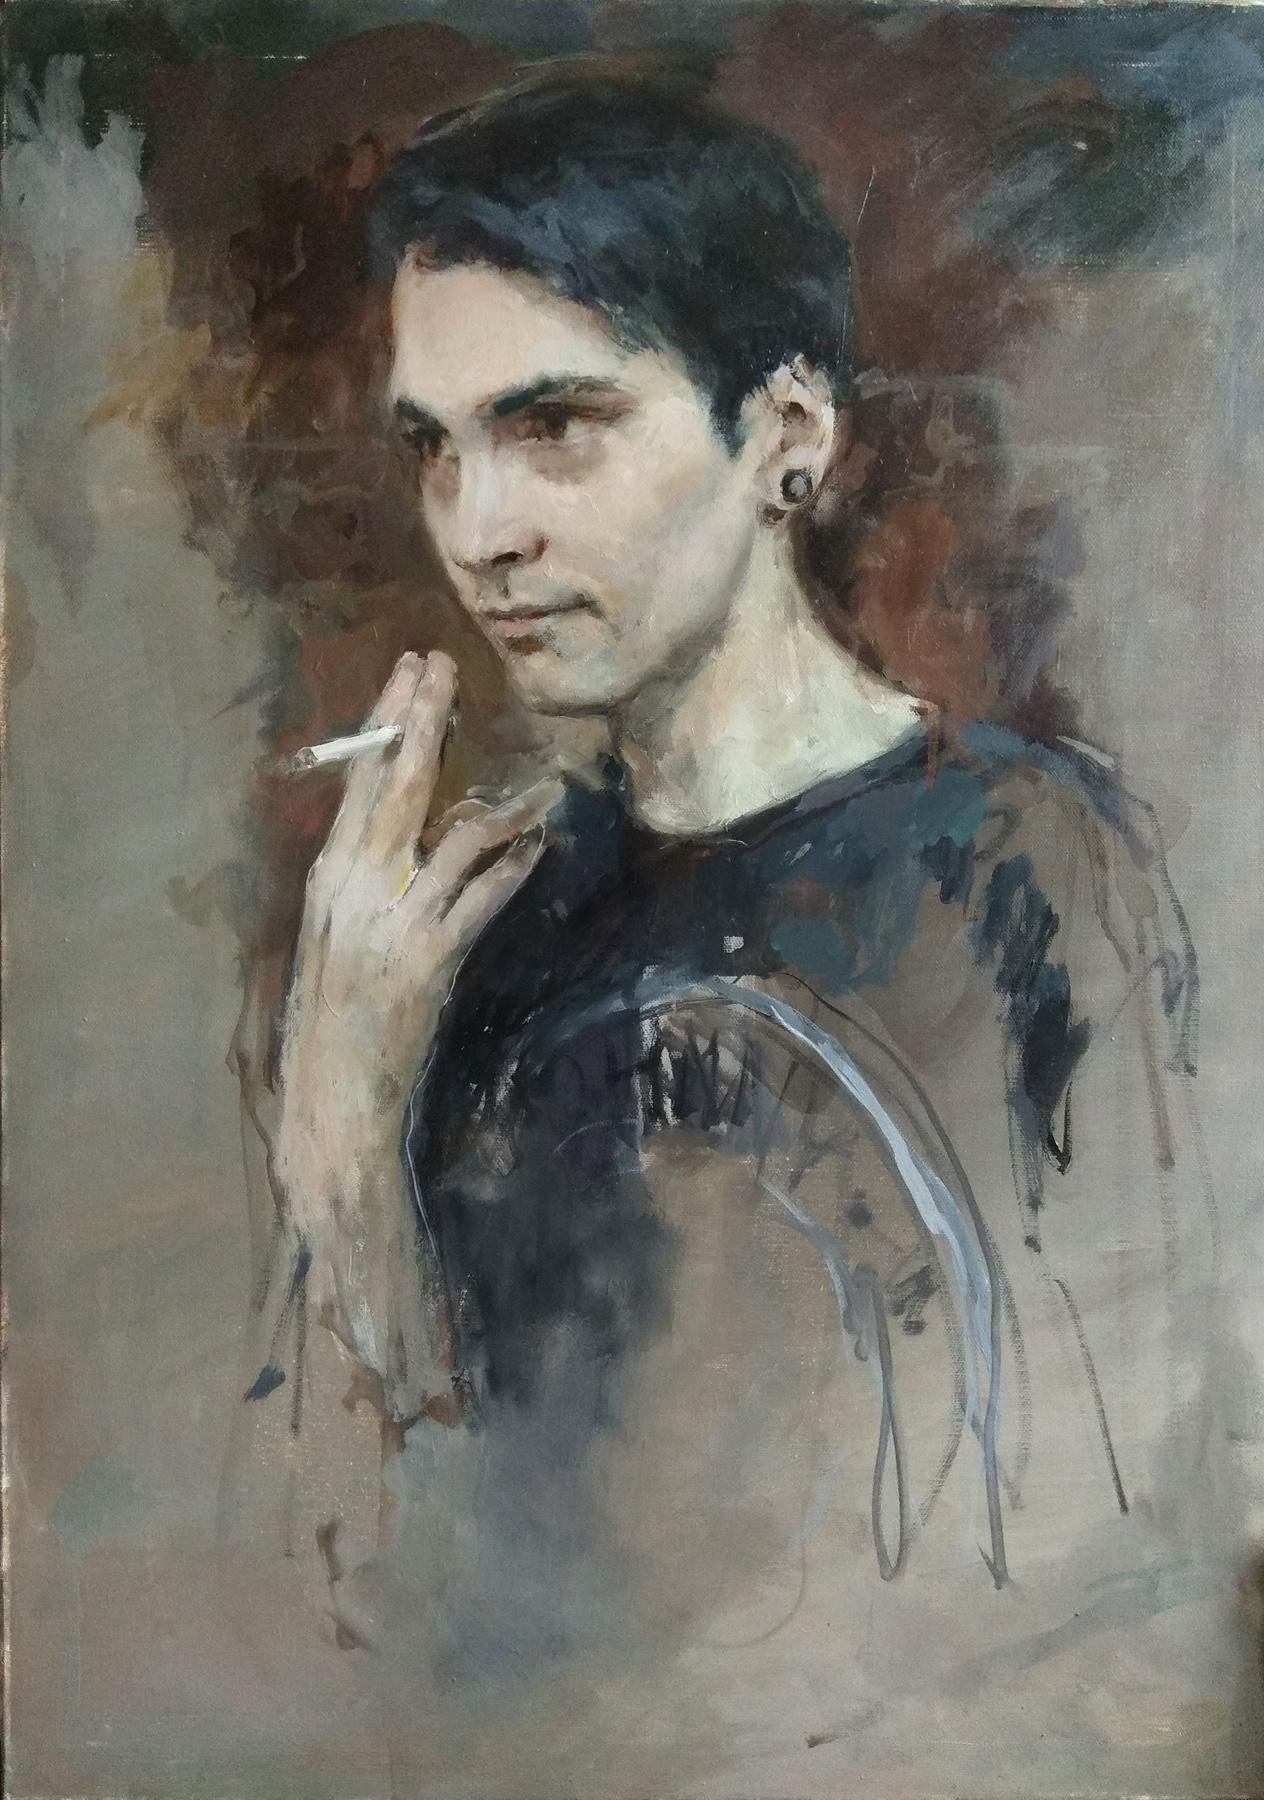 Arthur with cigarette. Original modern art painting